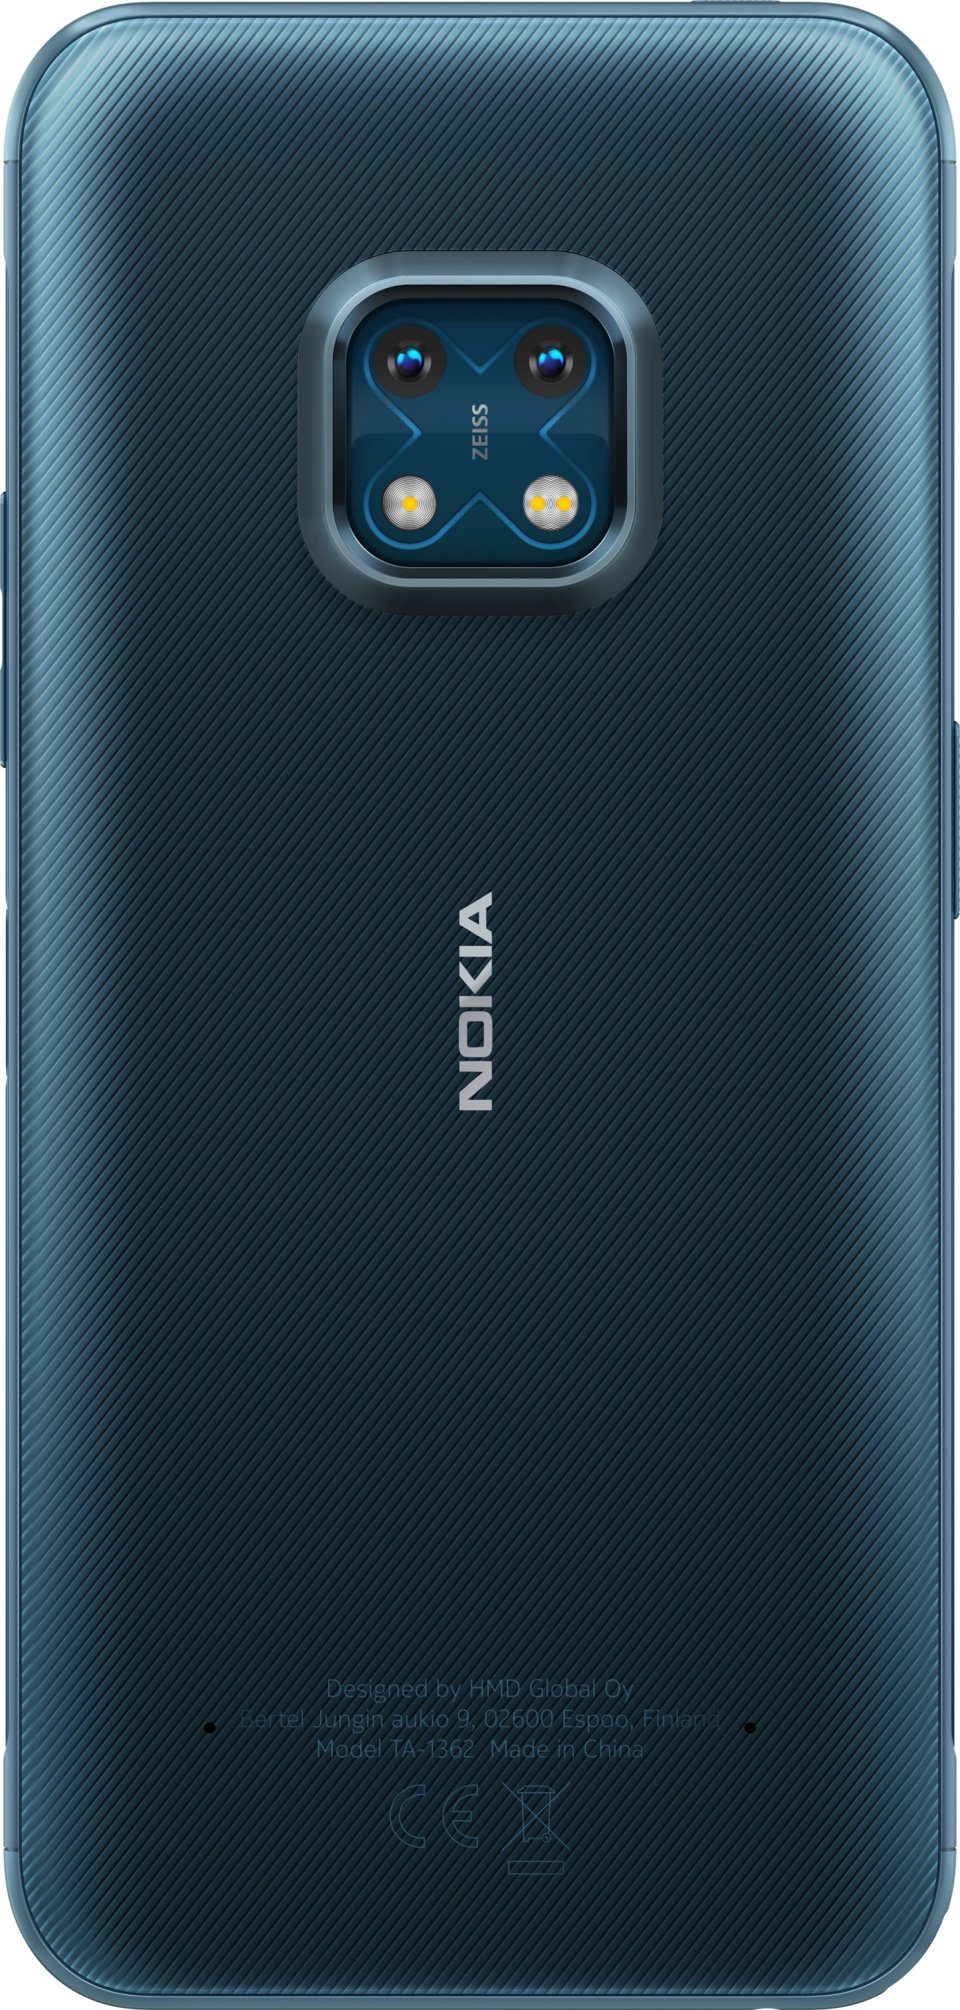 Nokia xr20